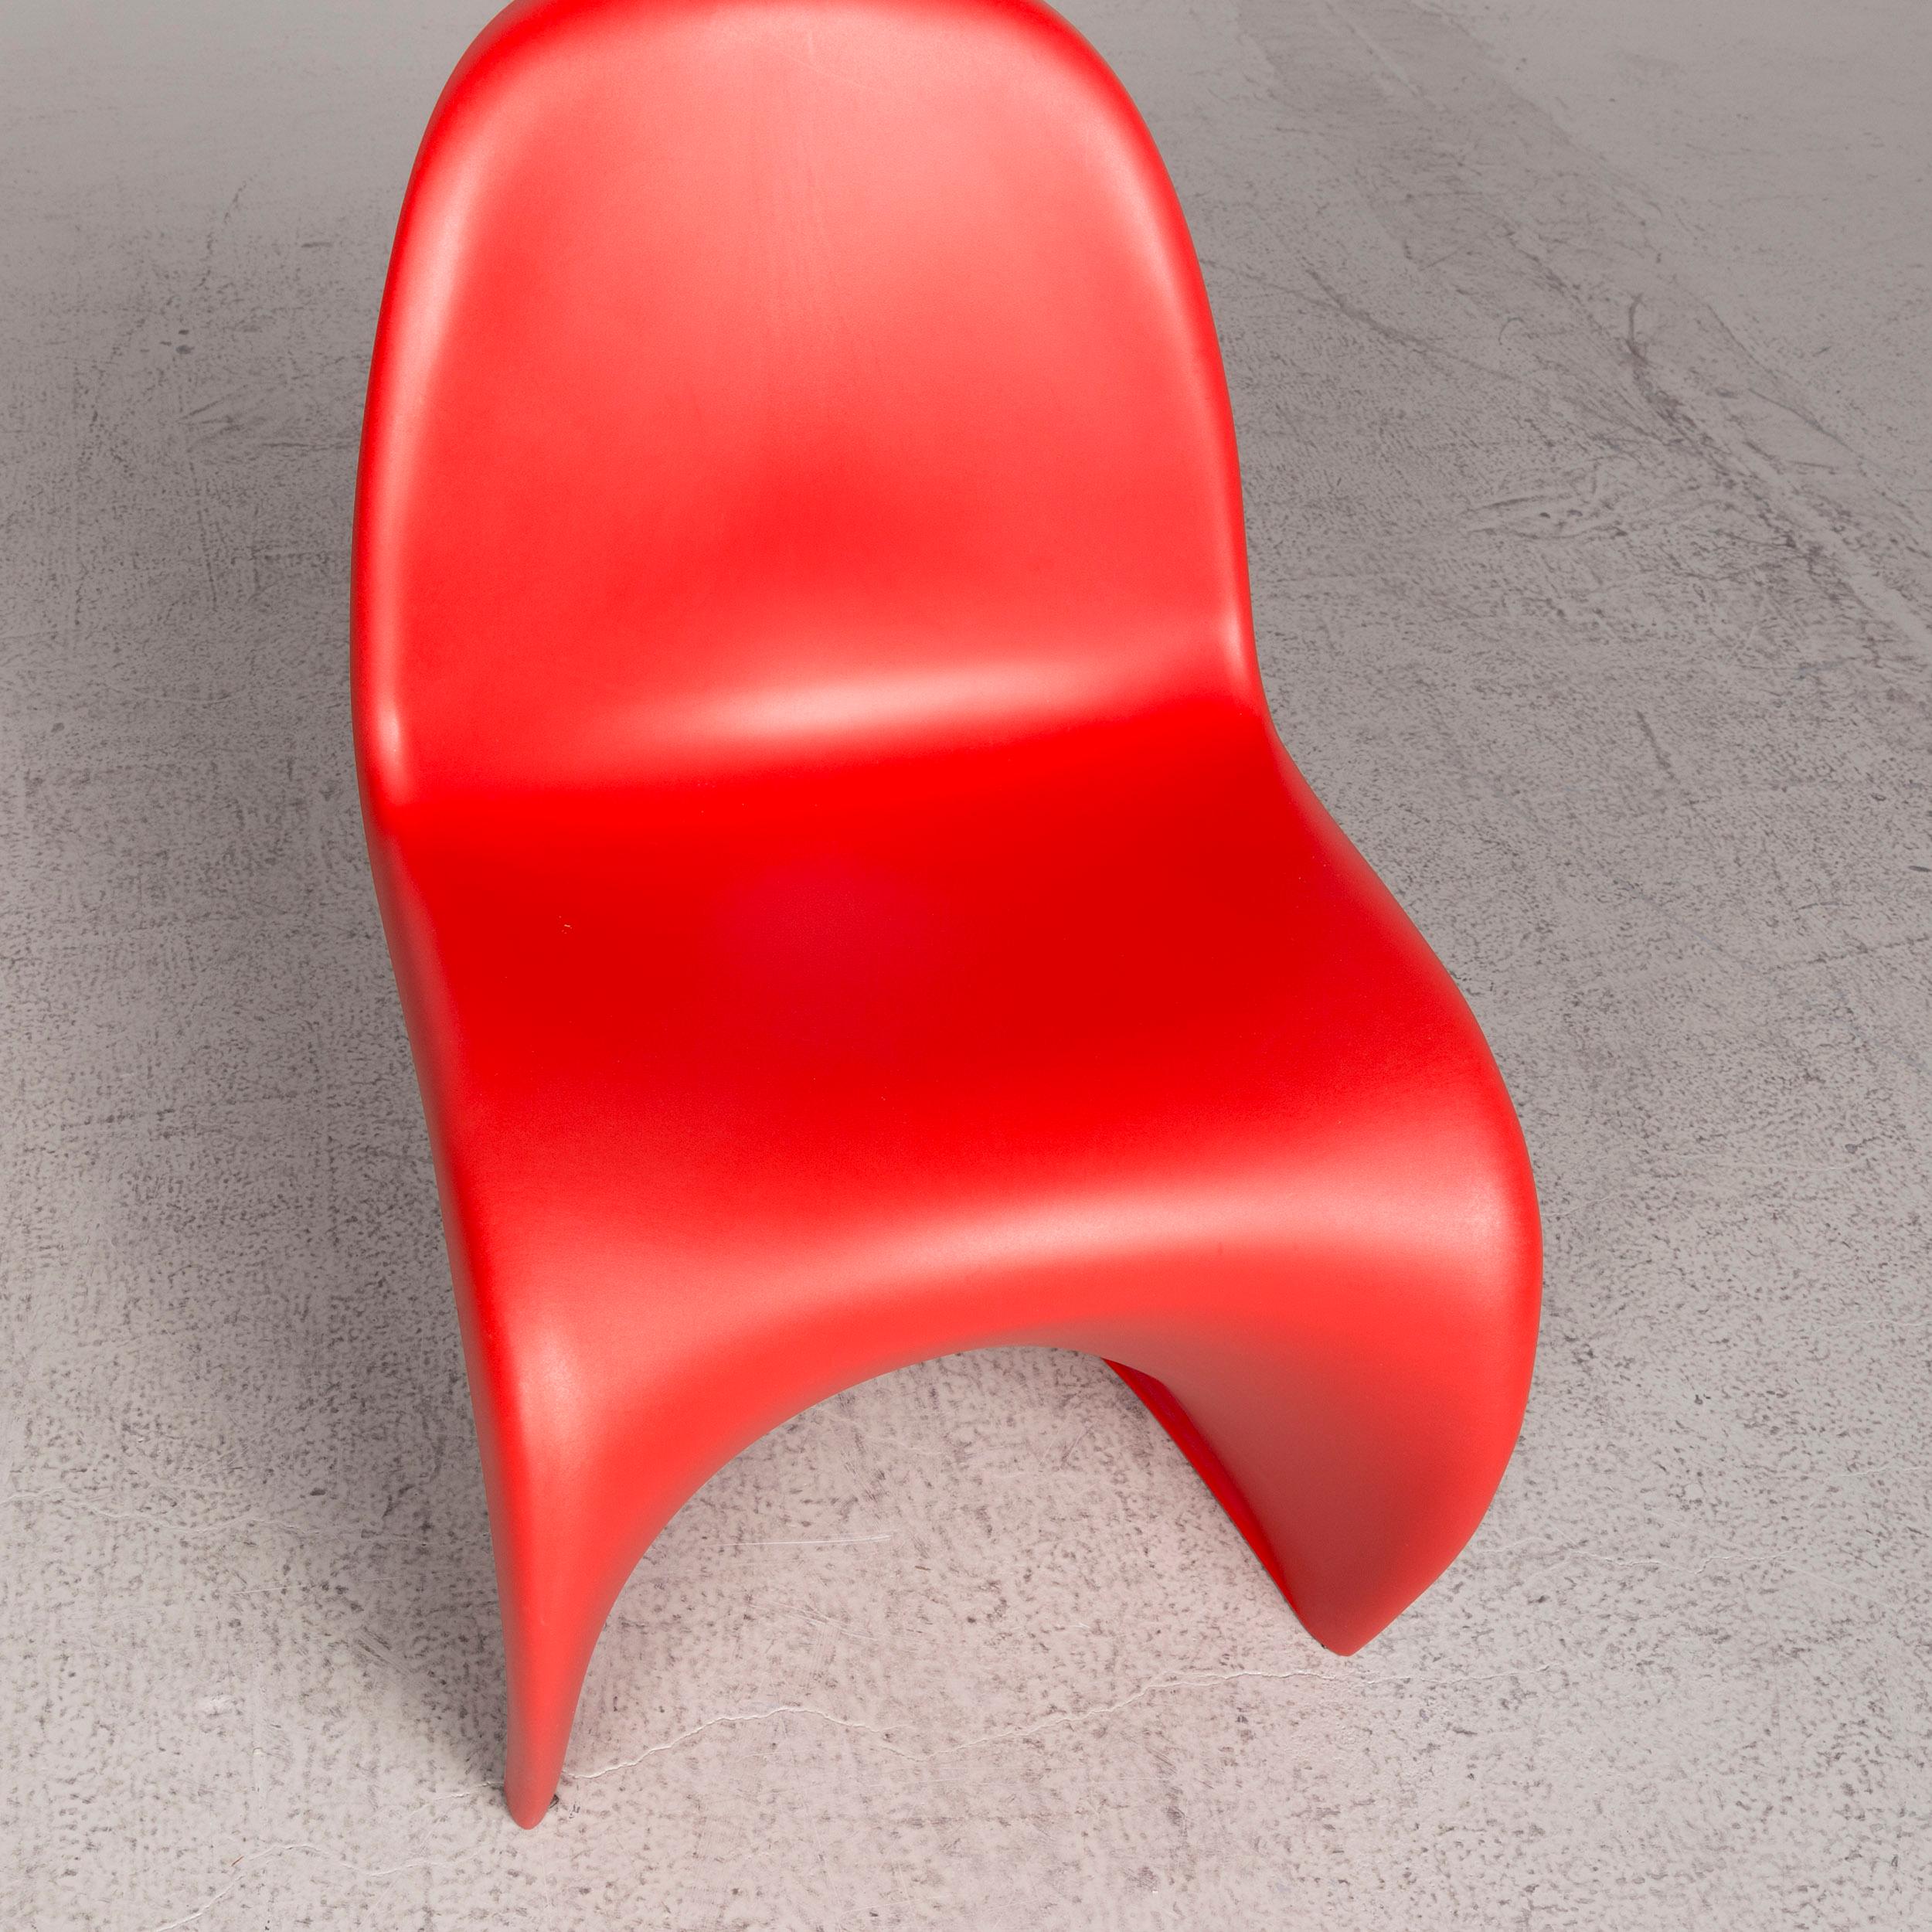 German Vitra Panton Chair Designer Plastic Armchair Red by Verner Panton Polyproypylen For Sale